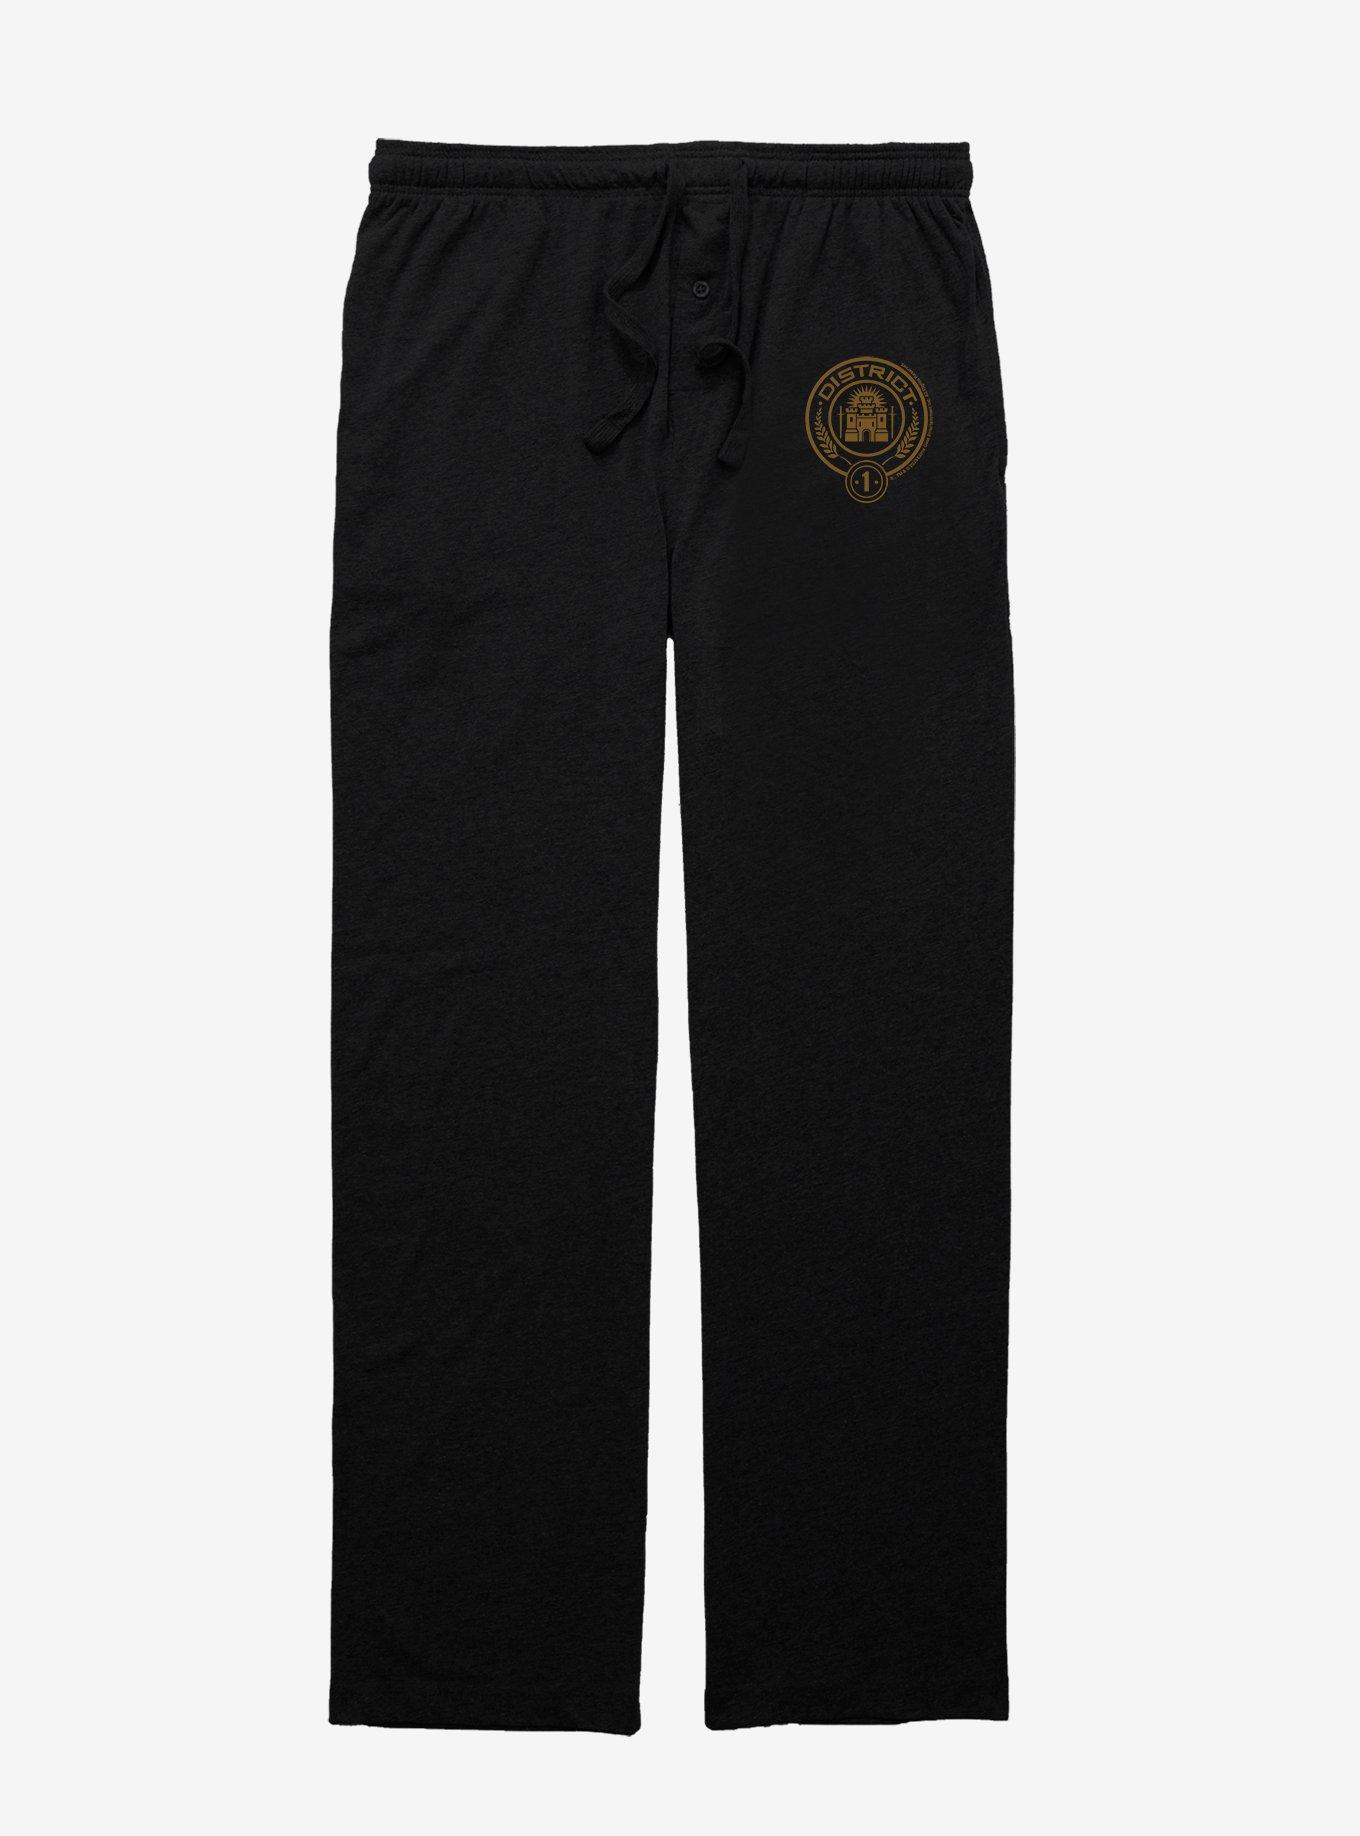 Hunger Games District 1 Emblem Pajama Pants, BLACK, hi-res